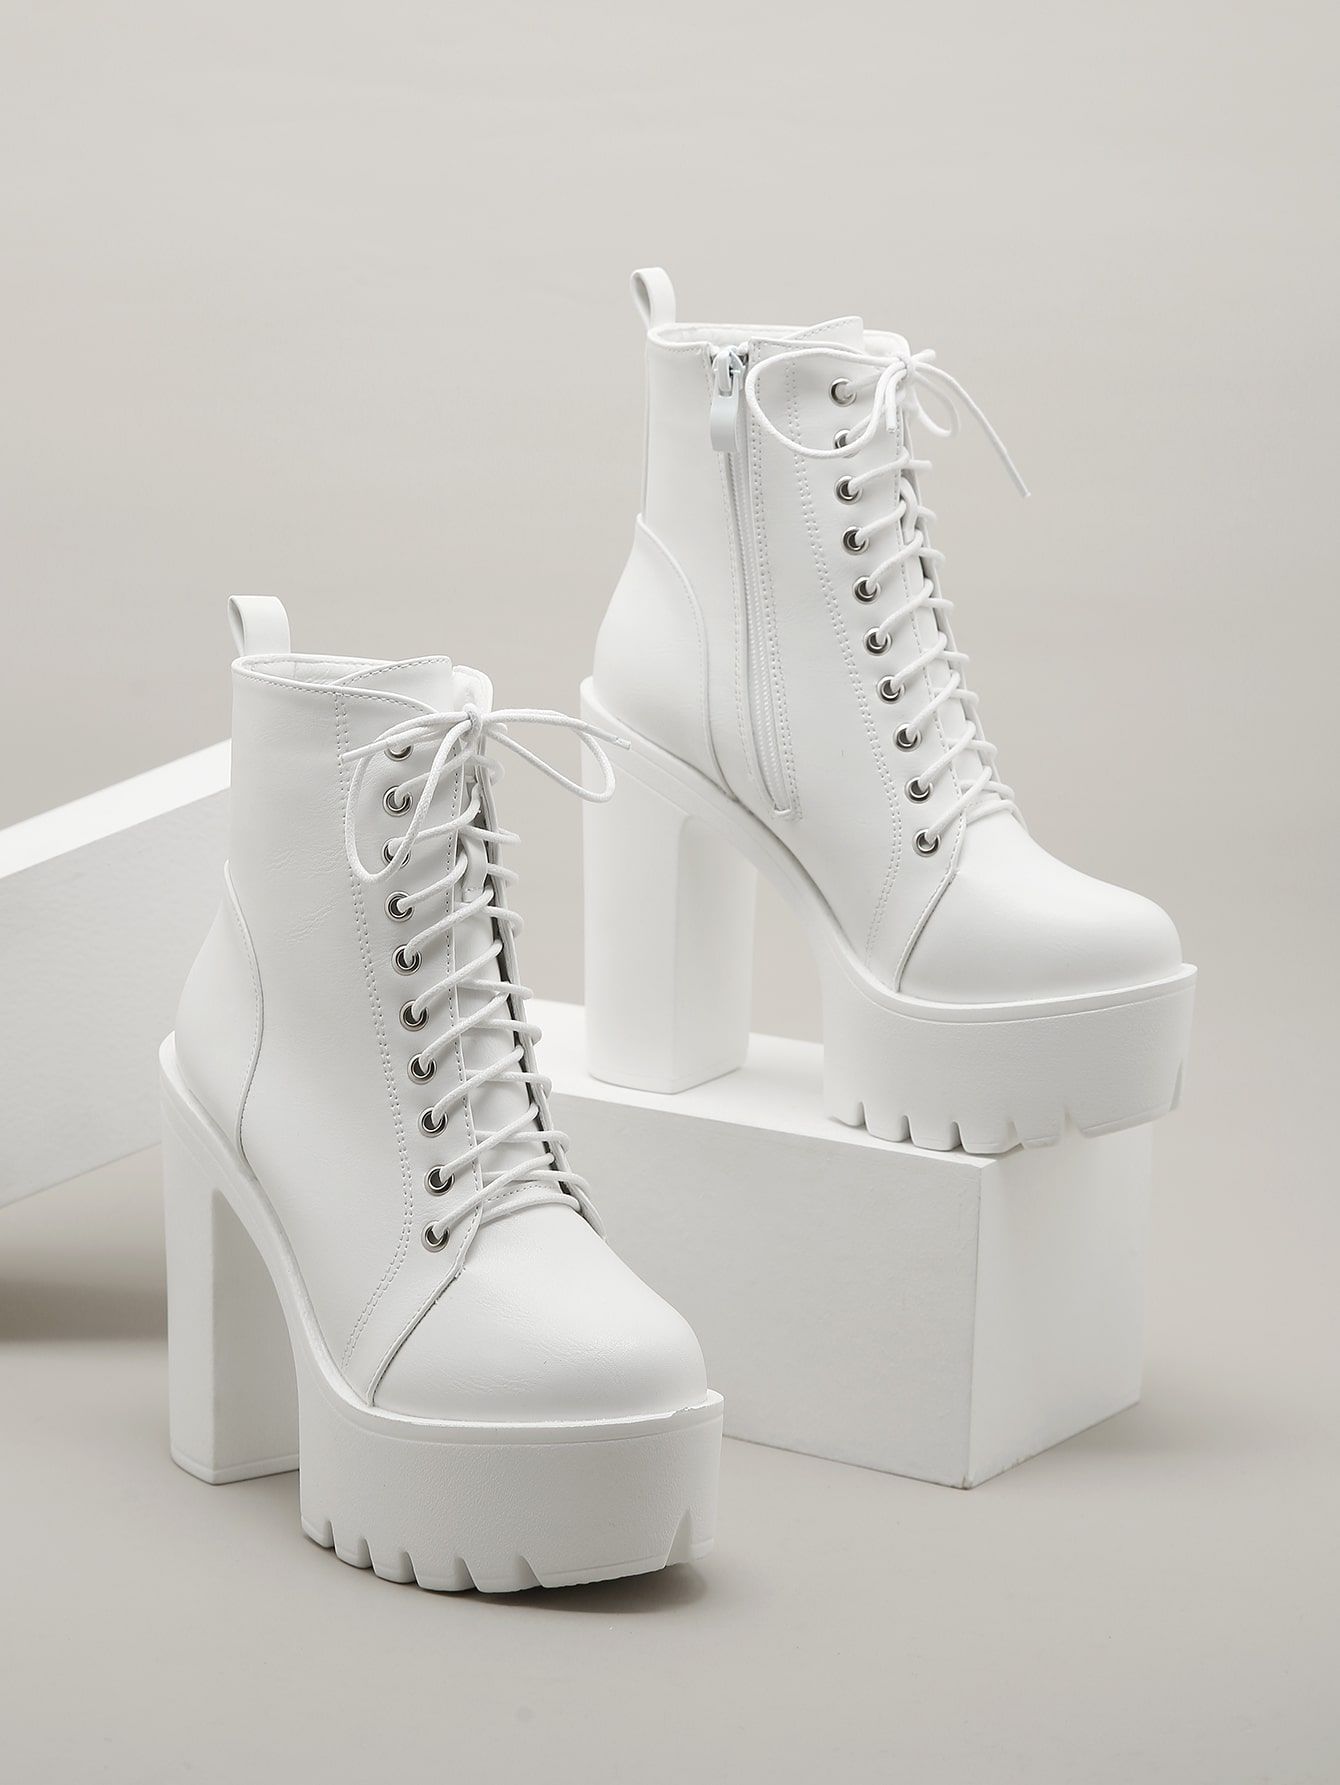 Enhance towards White boots for women glamorous look